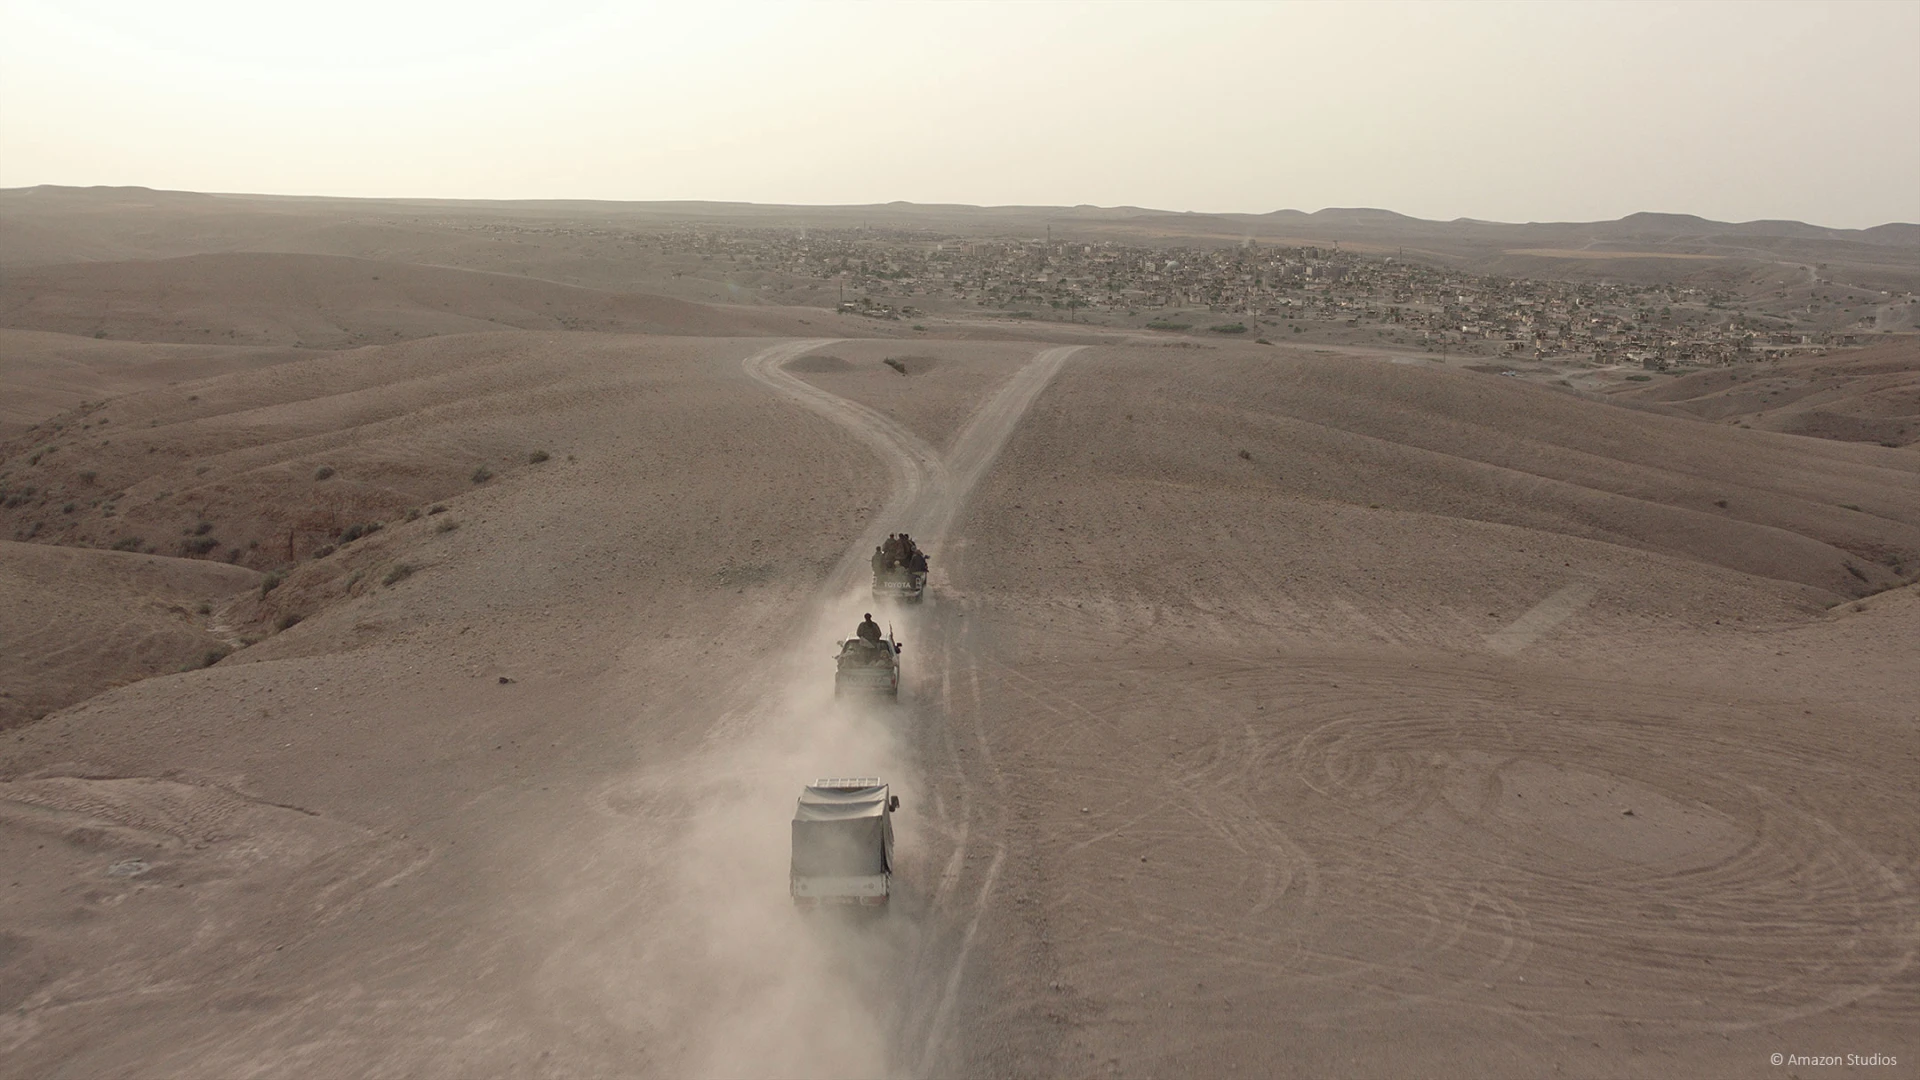 Tom Clancy’s Jack Ryan S01 cars in desert shot Raynault vfx